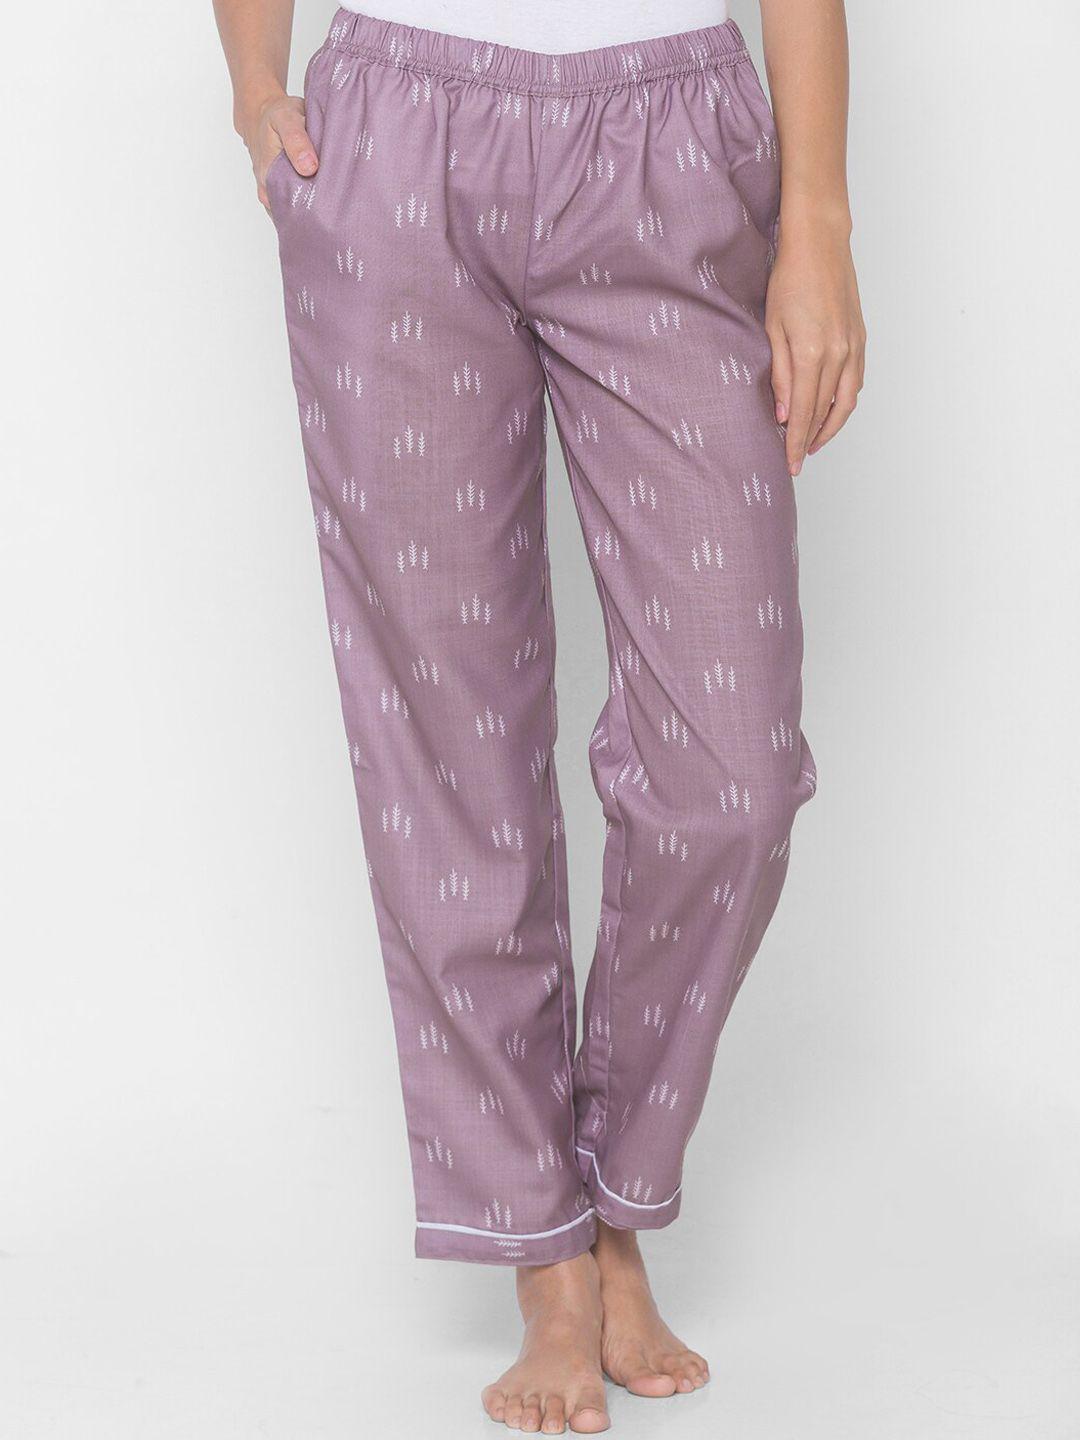 fashionrack women purple cotton printed lounge pants